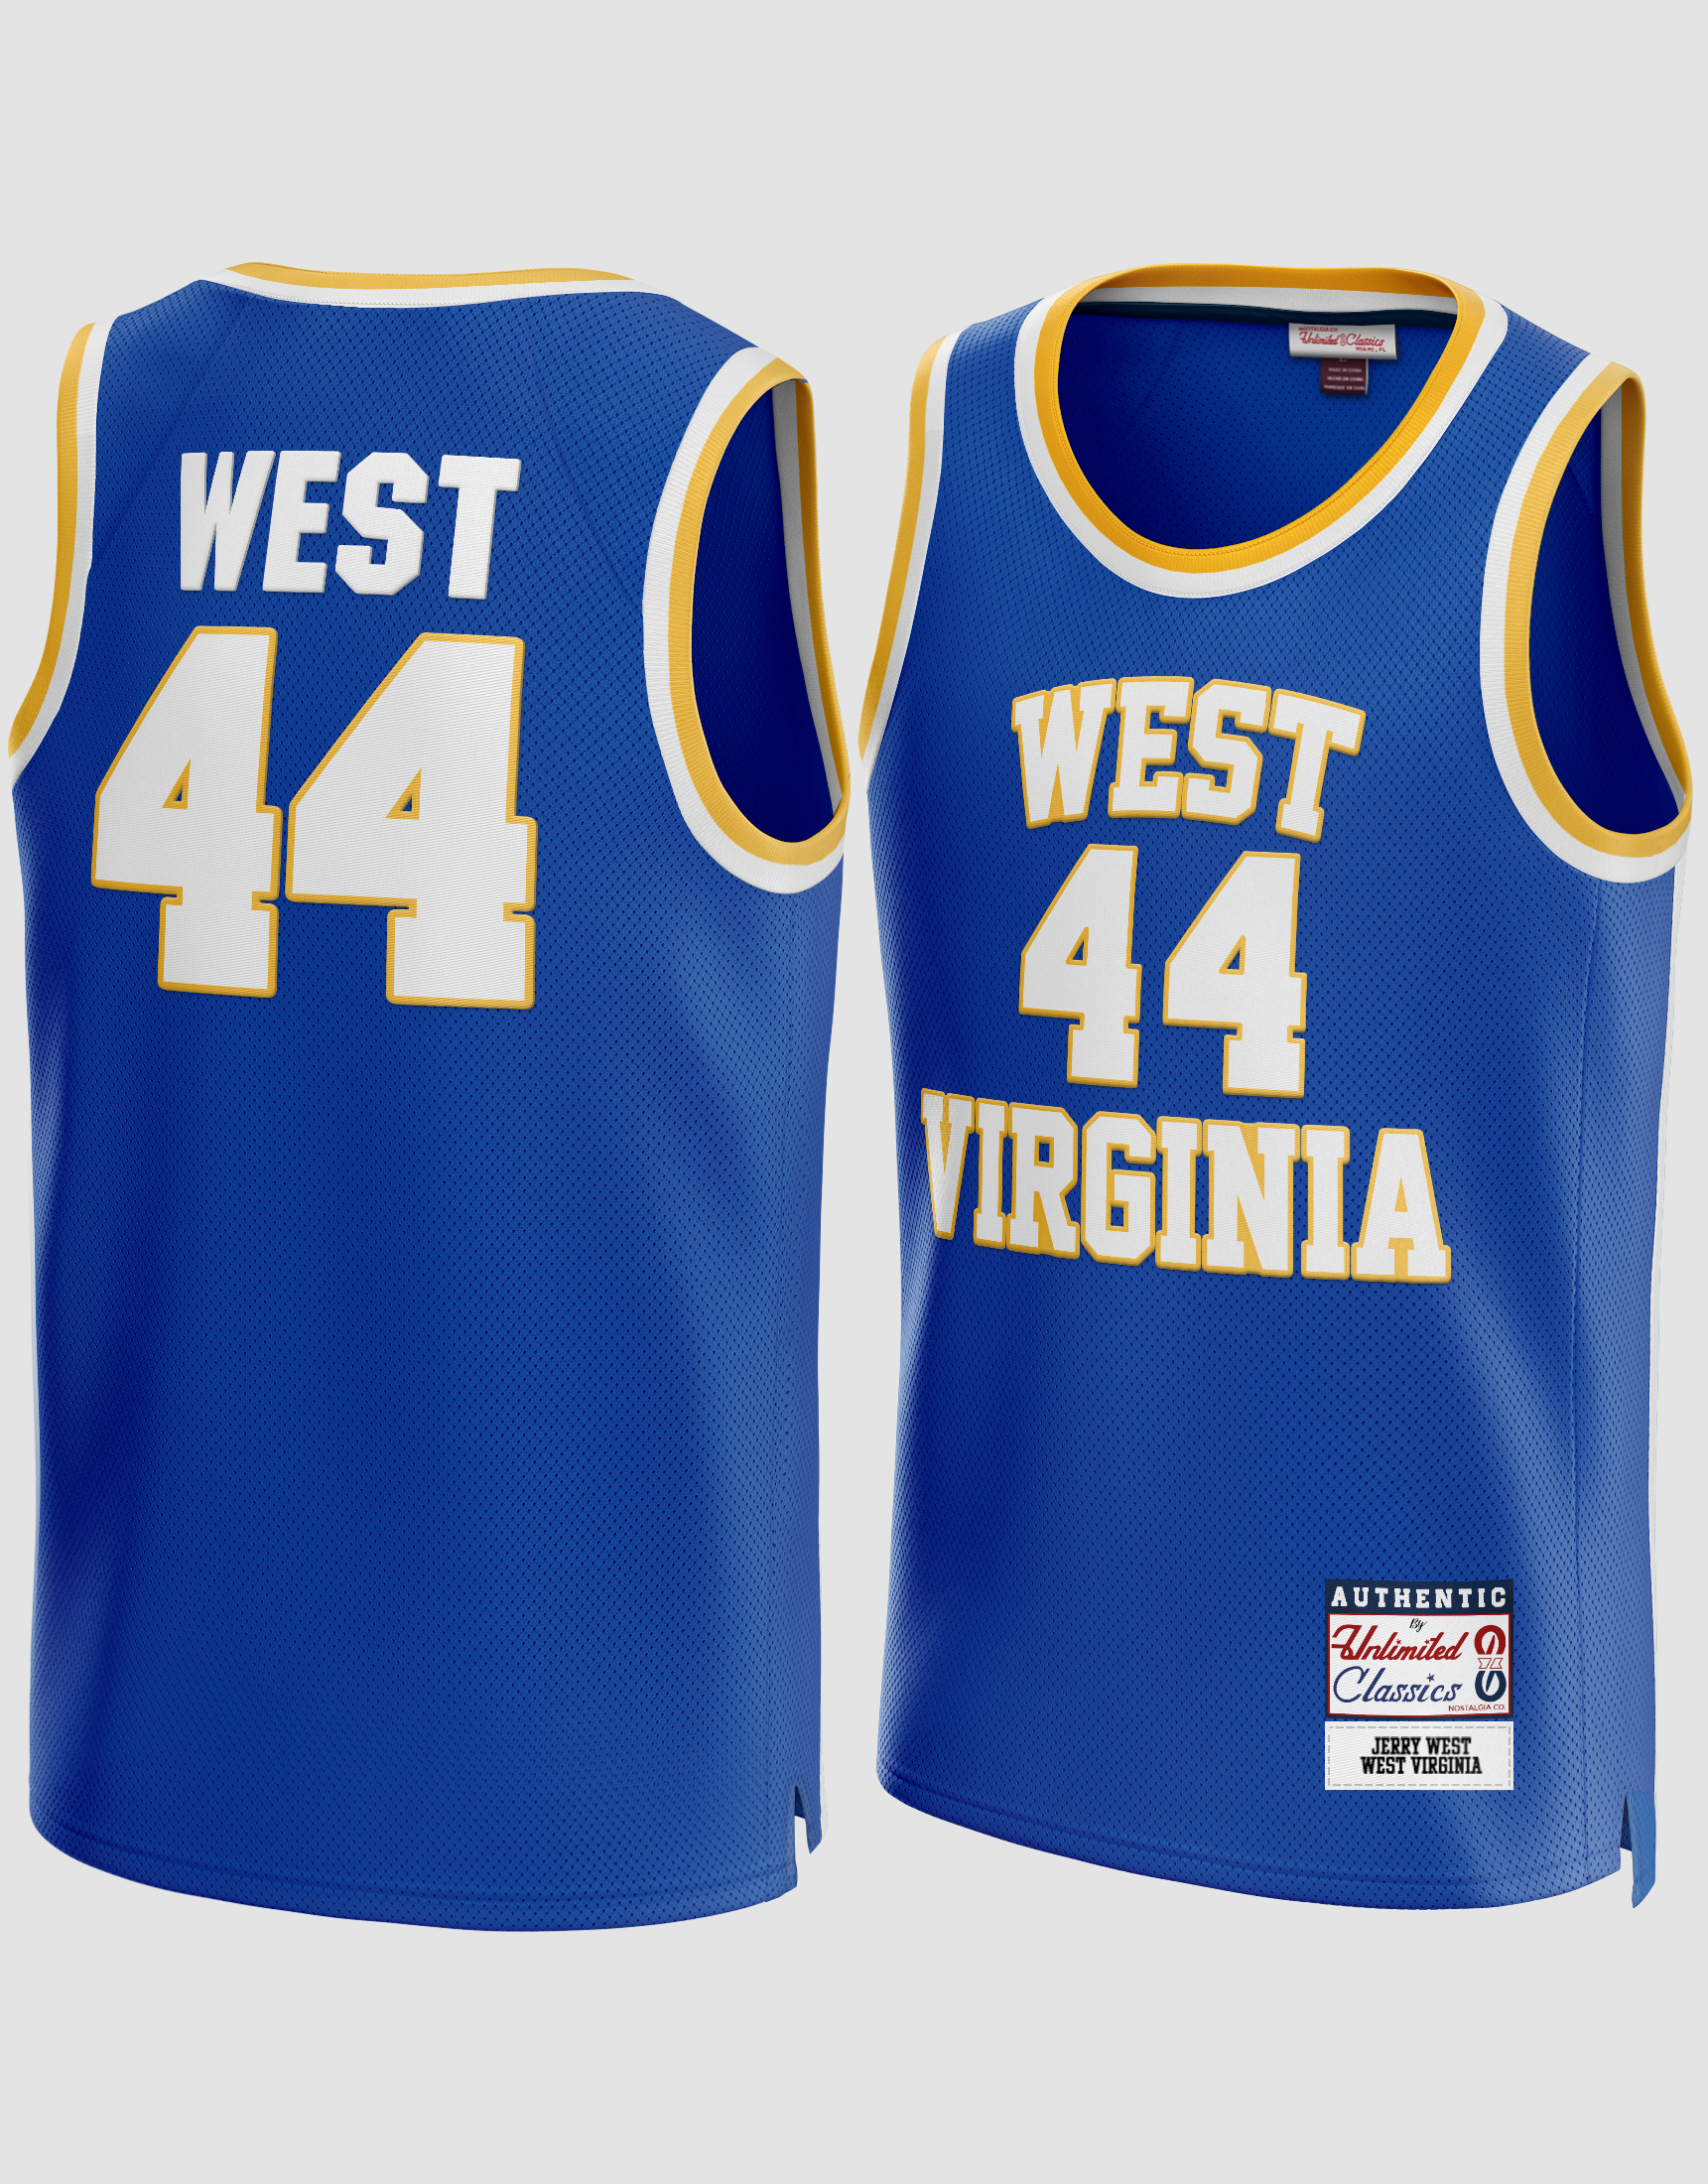 Jerry West NBA jersey